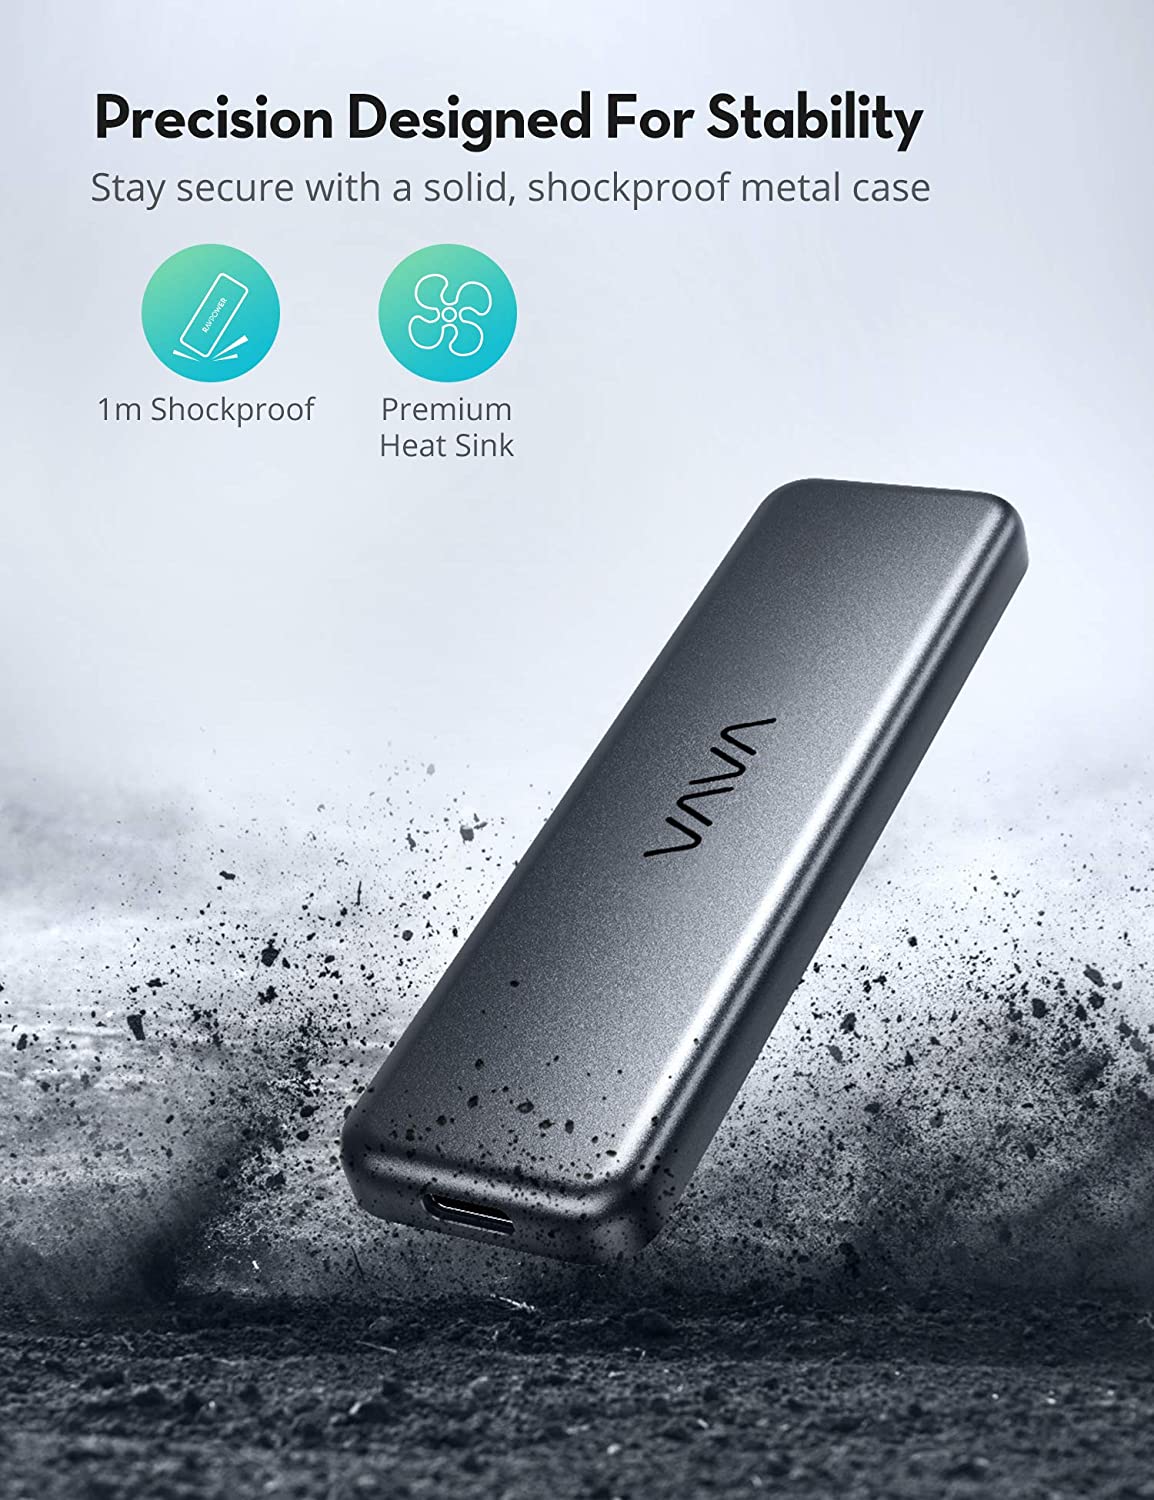 VAVA Portable External SSD Pro 512GB Hard Drive 540MB/S Data Transfer NAND Flash